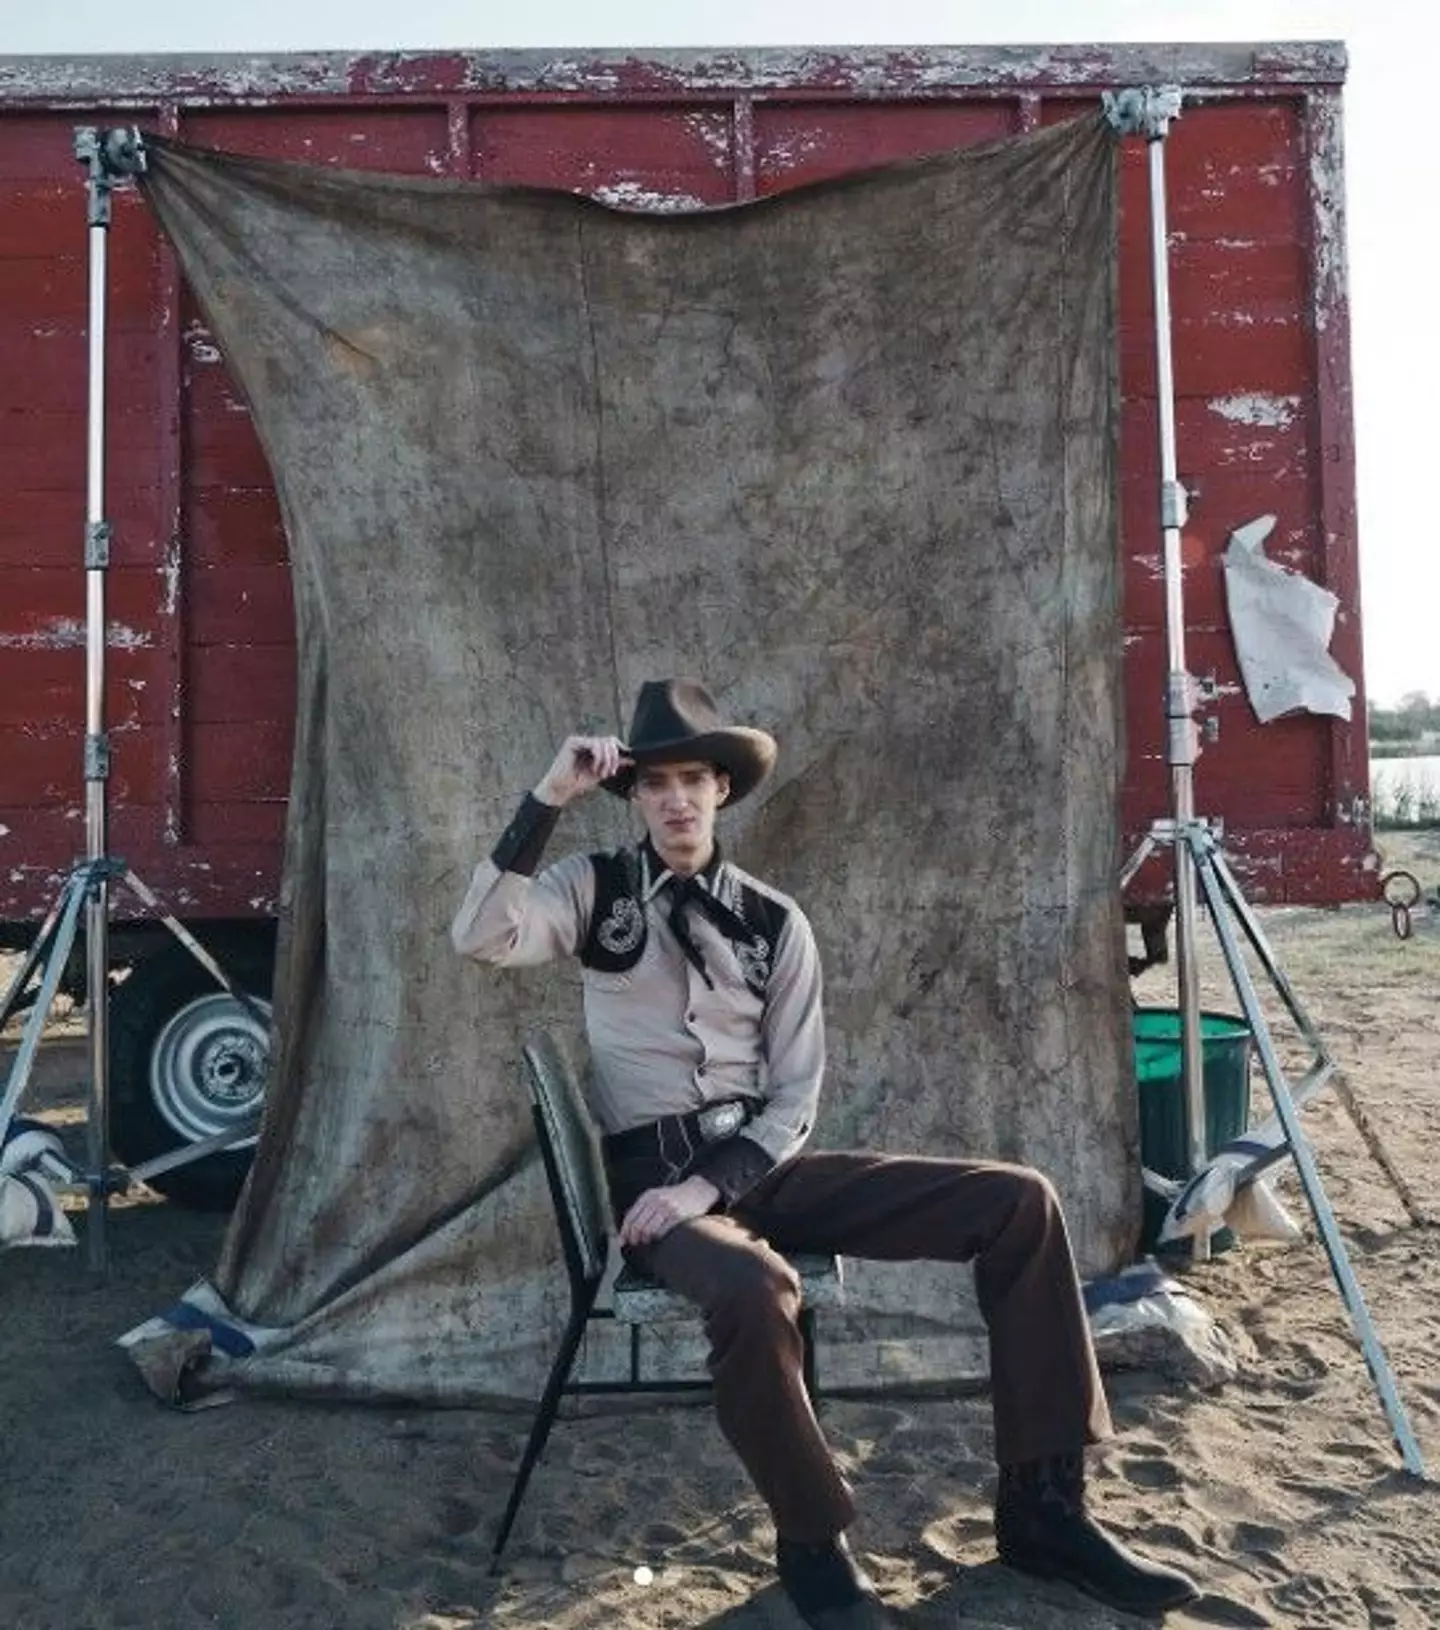 A young Elvis Presley dressed in cowboy attire.